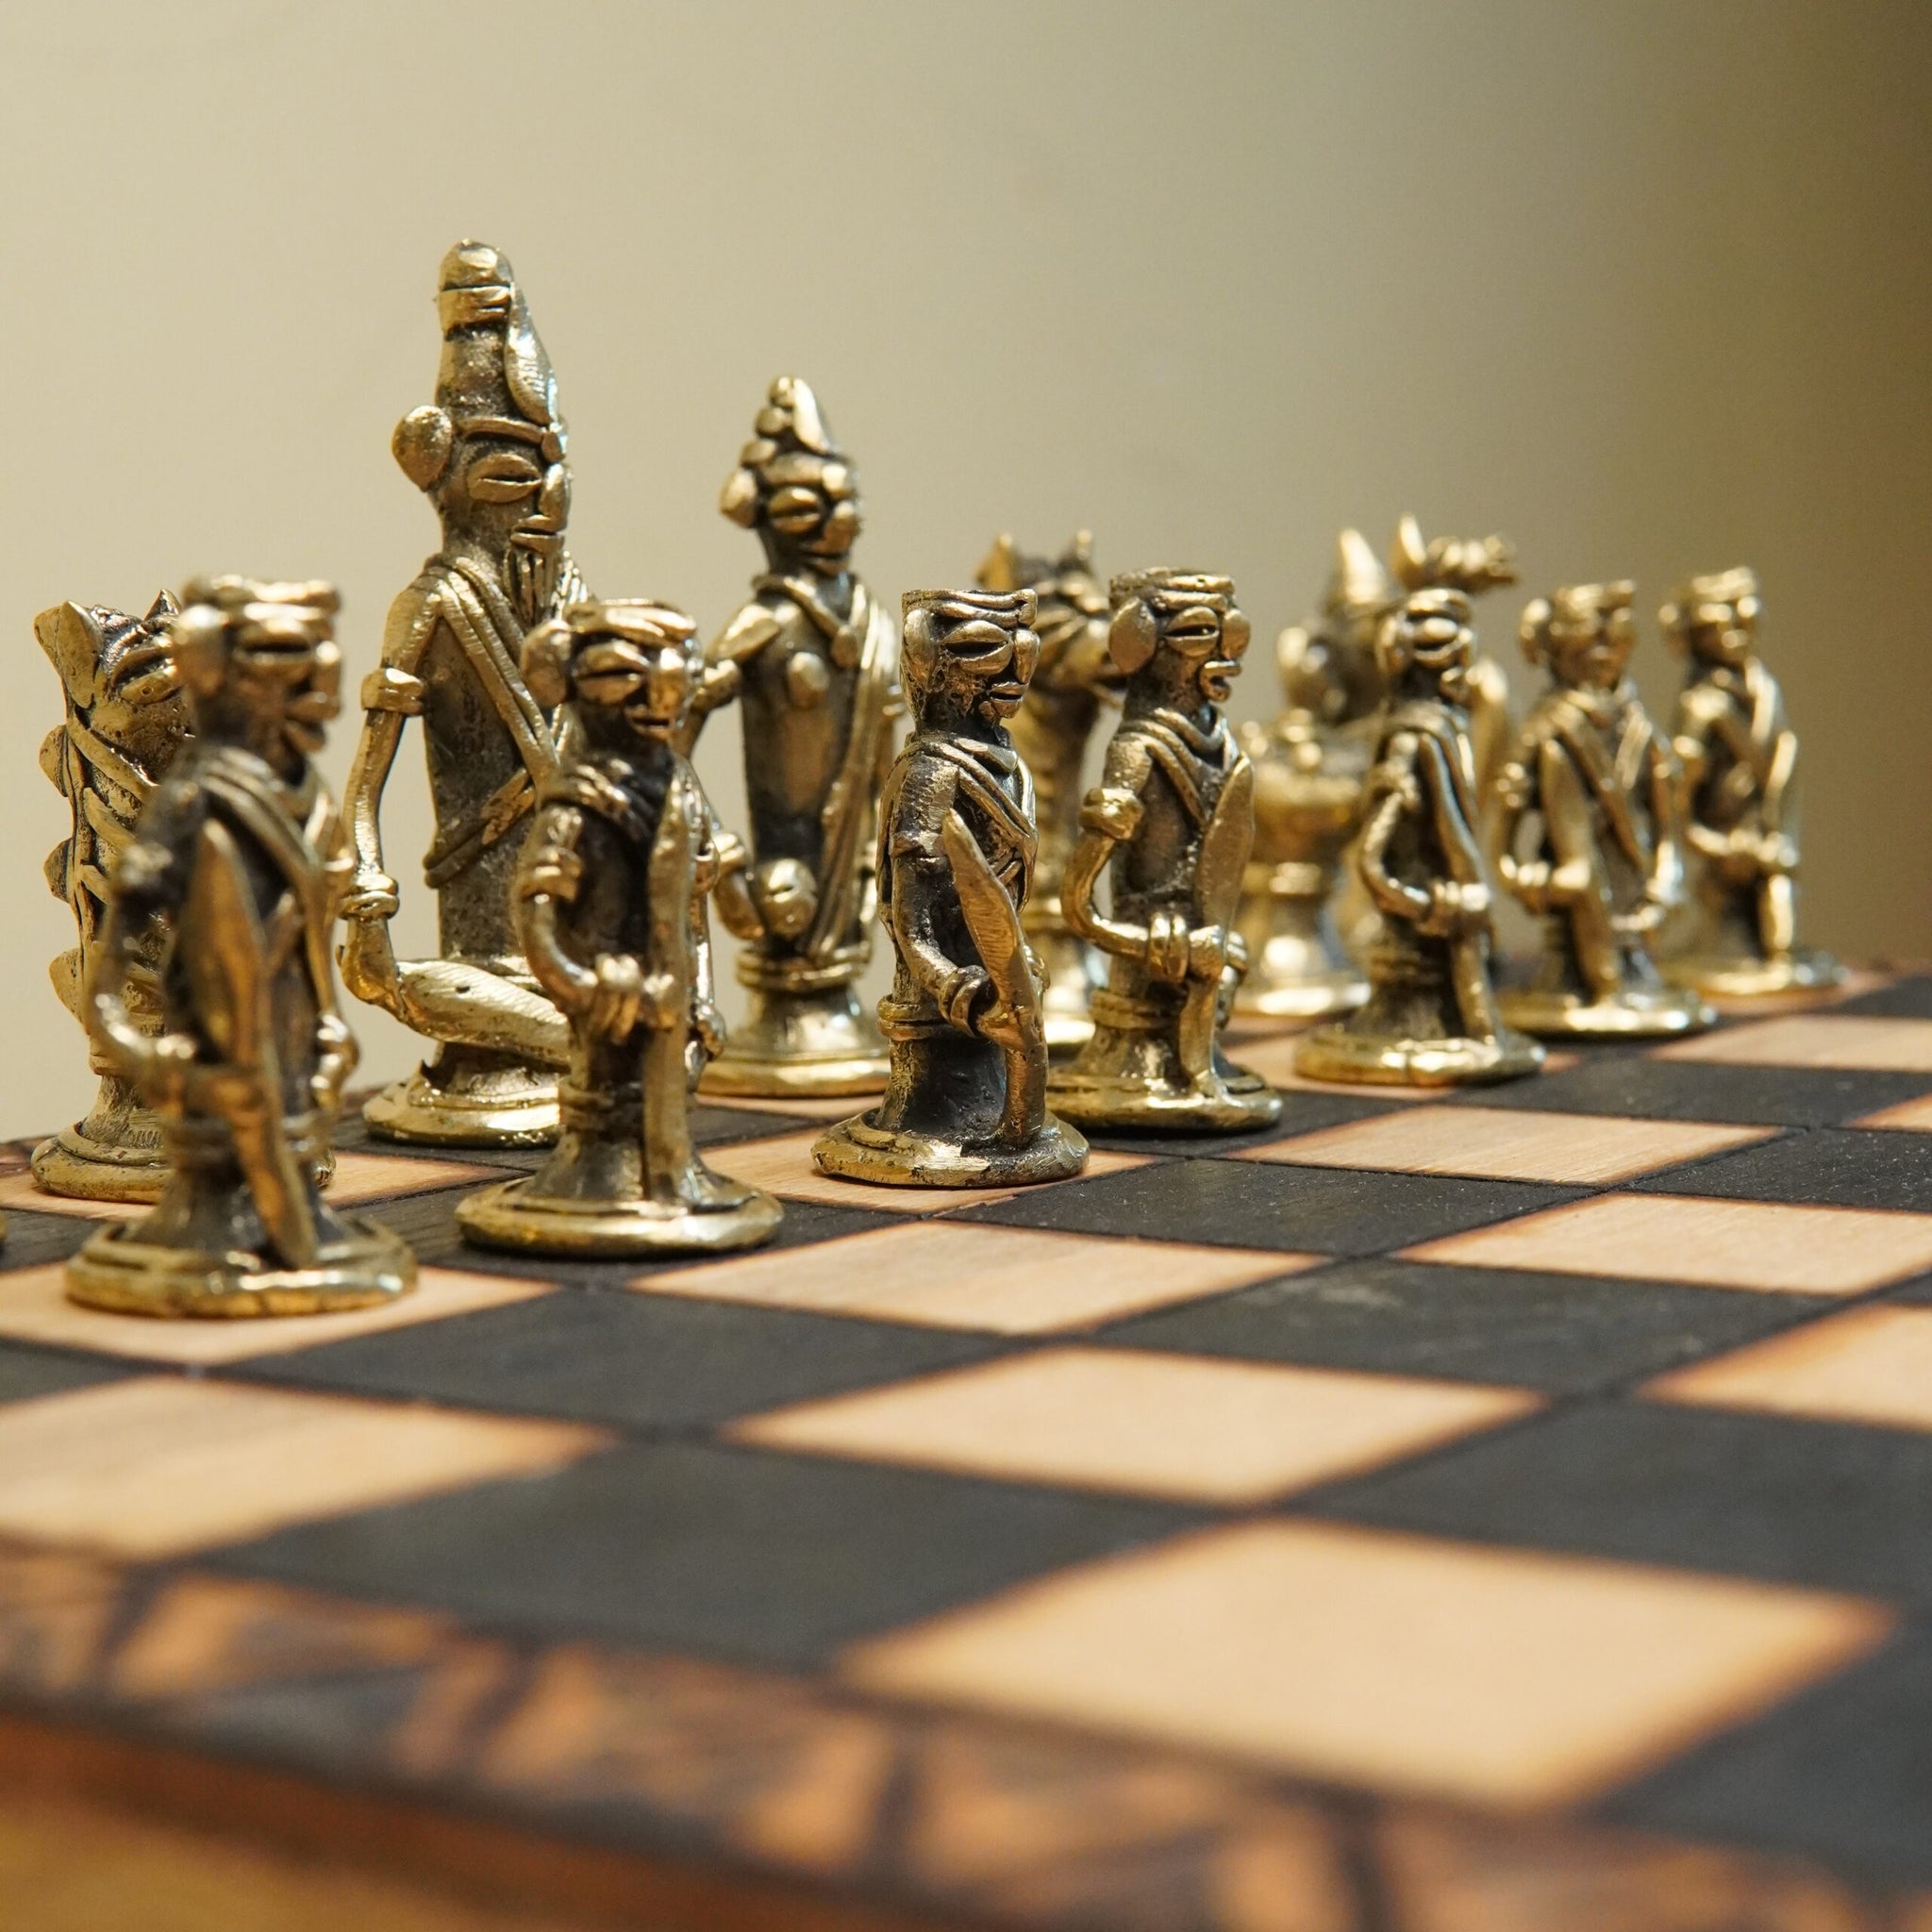 Tribal chess set